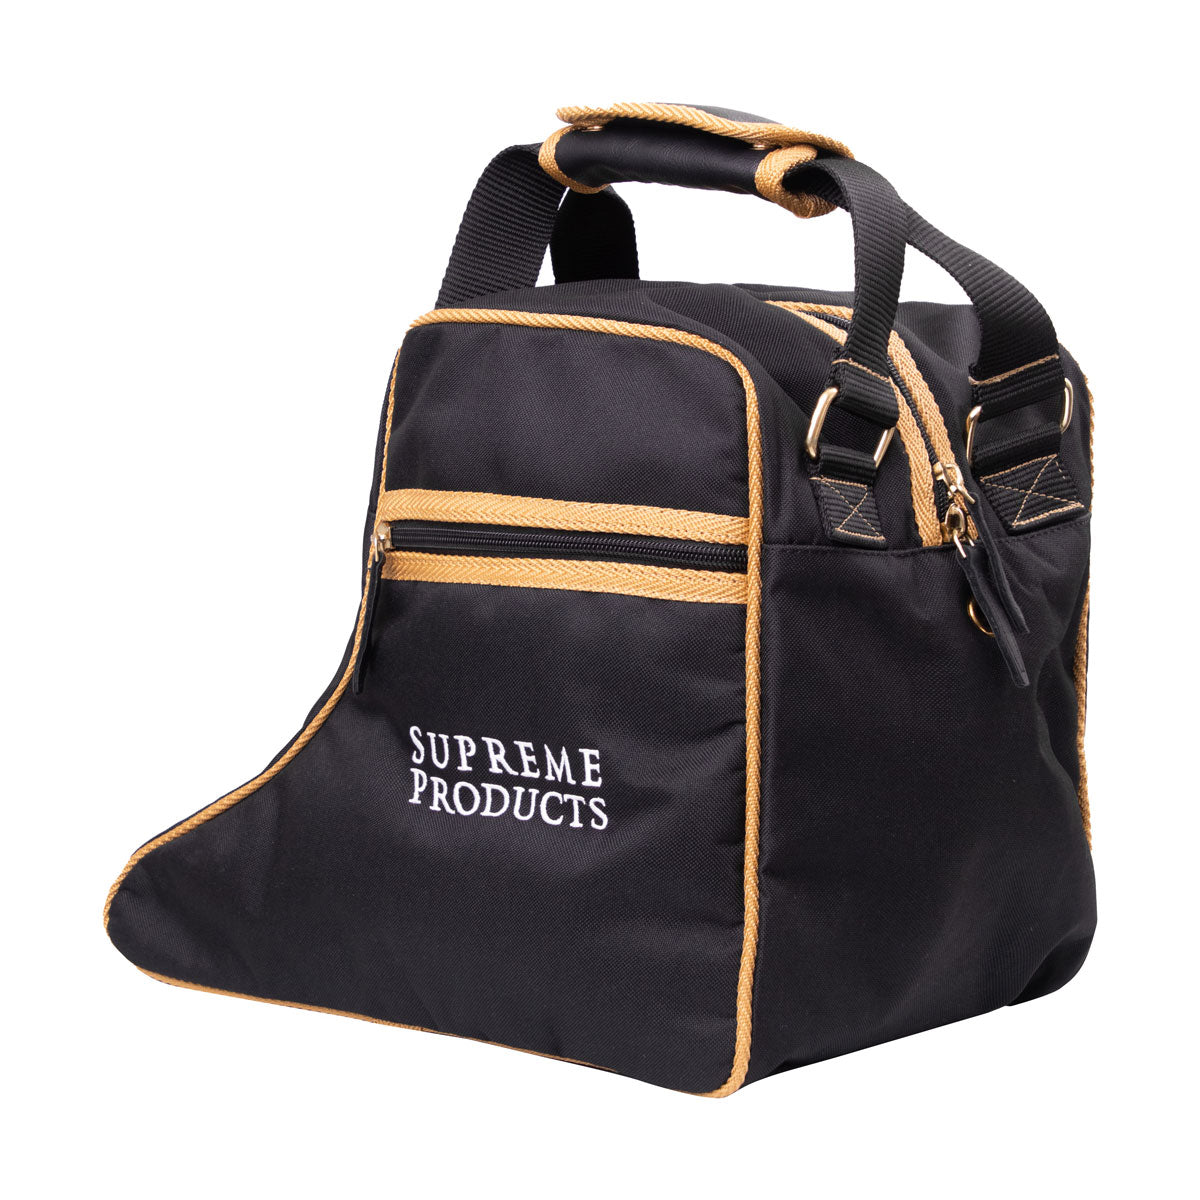 Supreme Products Pro Groom Jodhpur Boot Bag